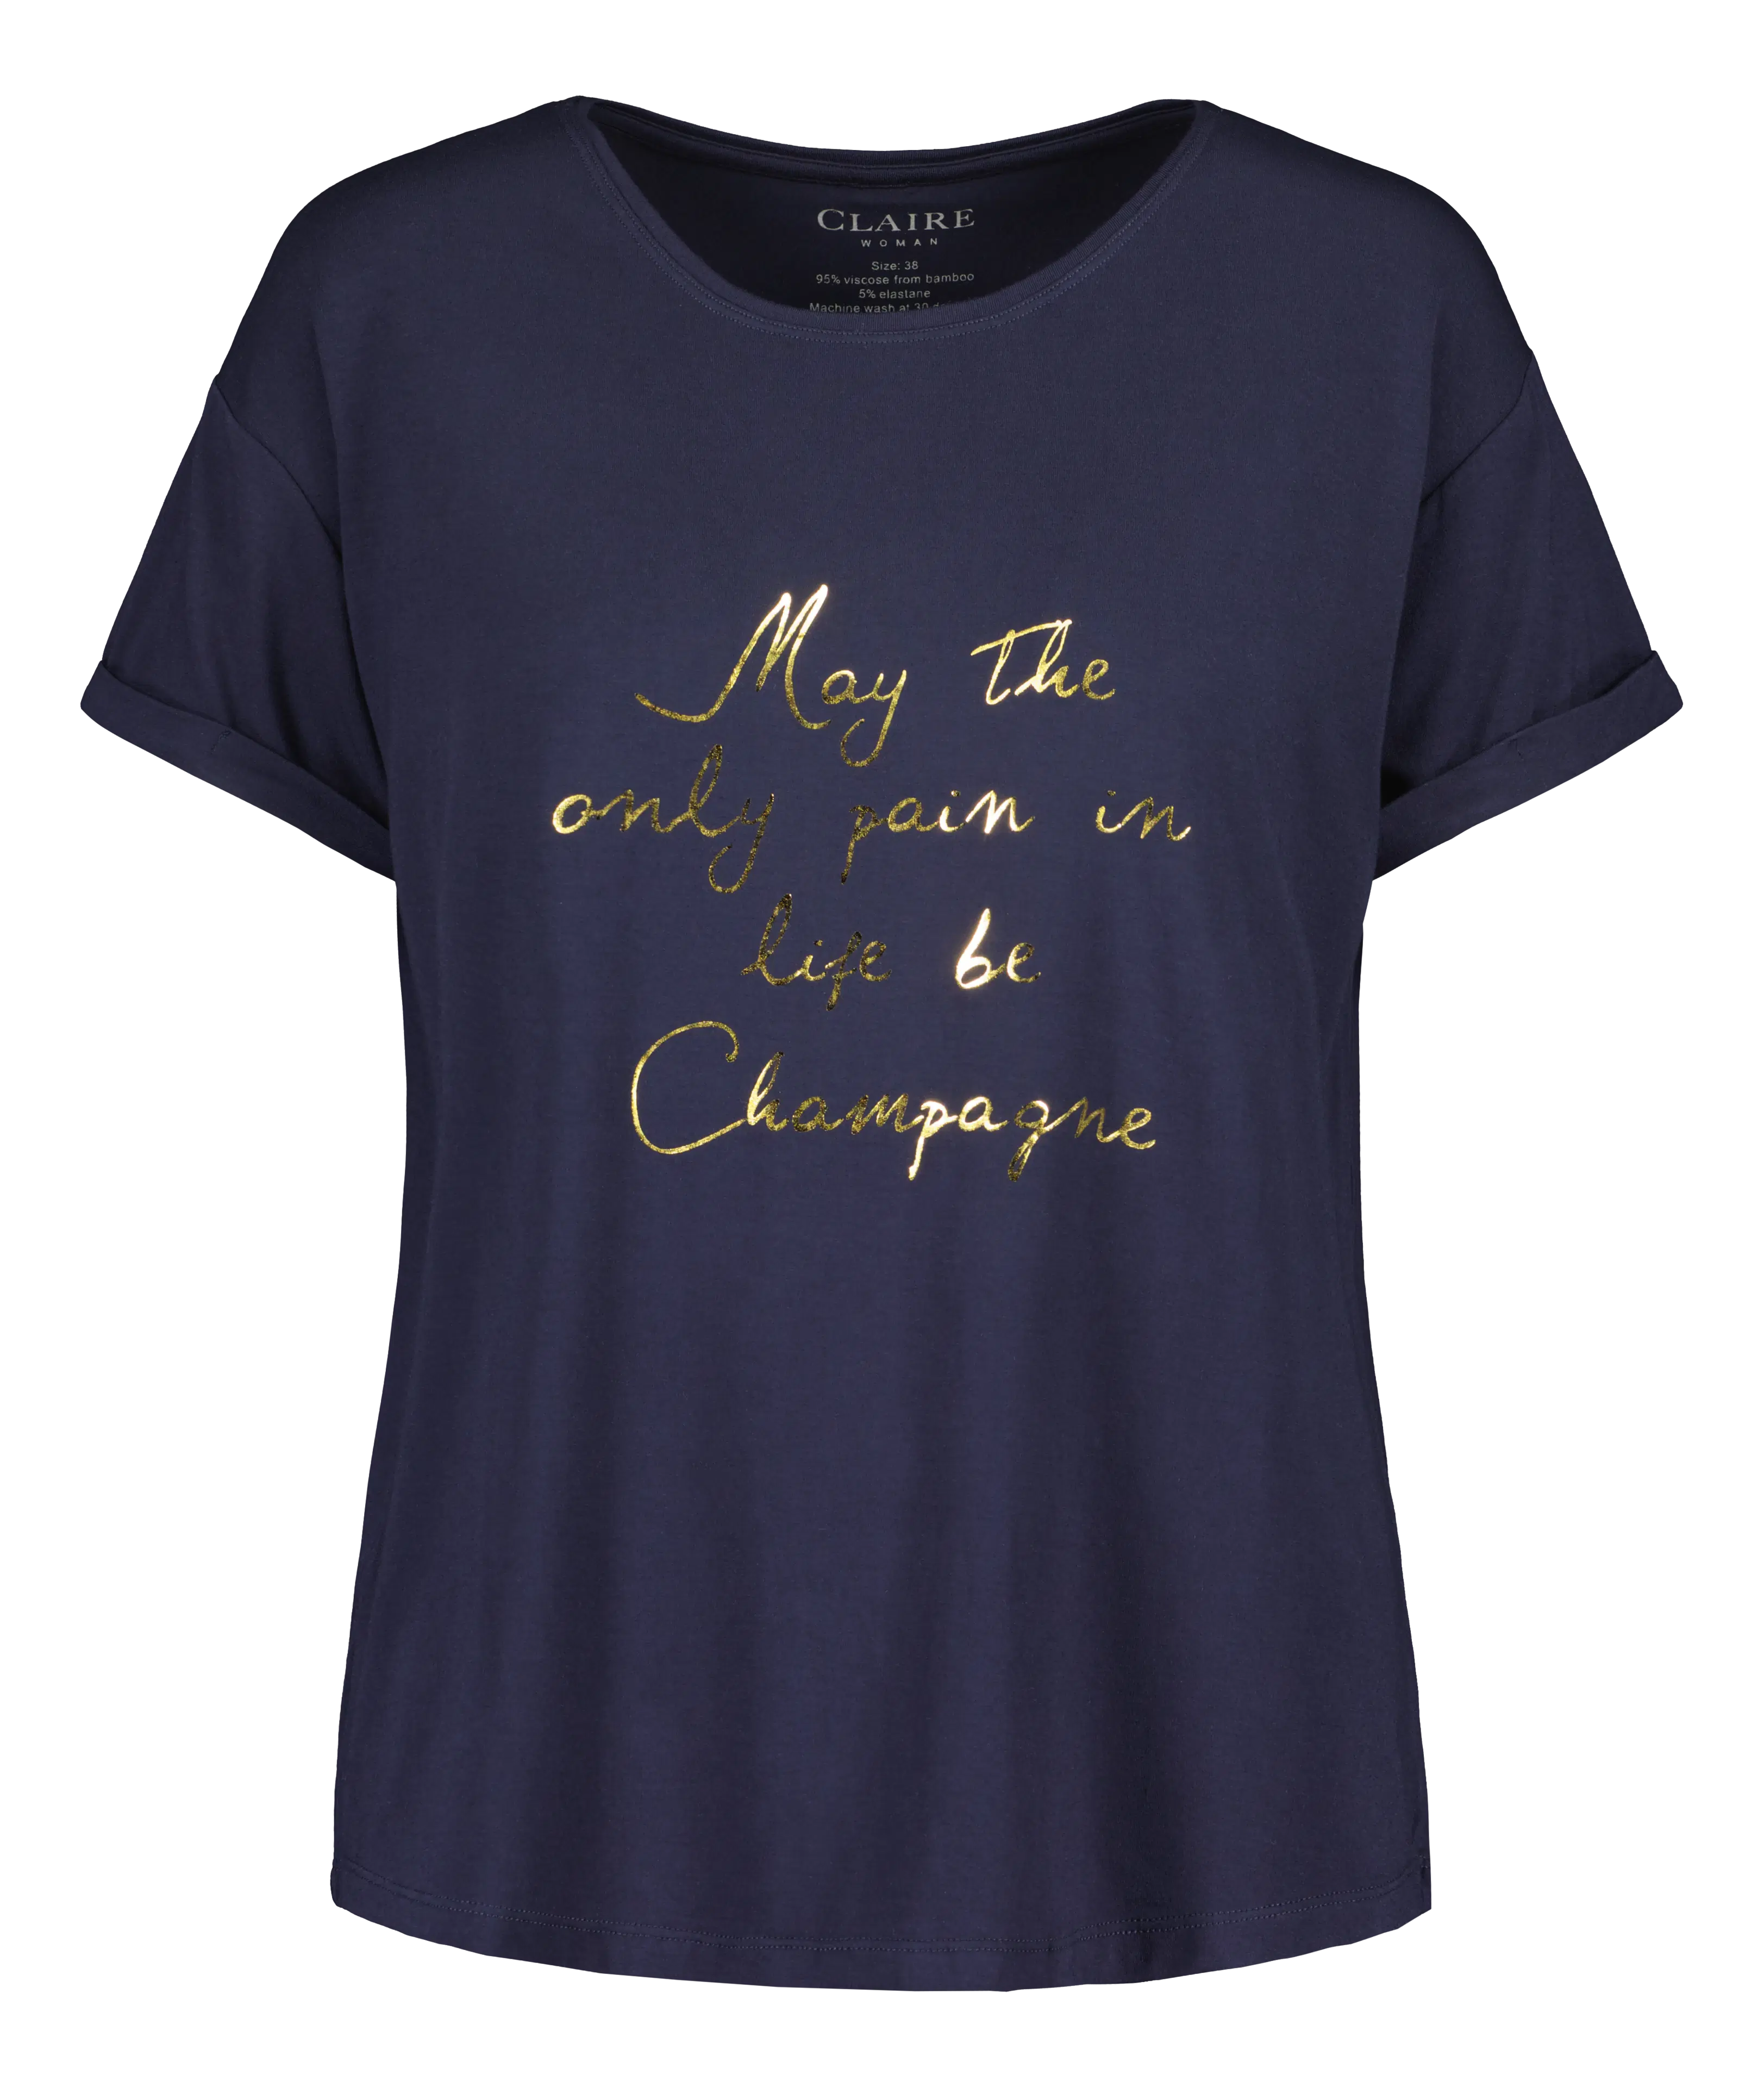 Claire Clea Aiofe shampanja teksti t-paita